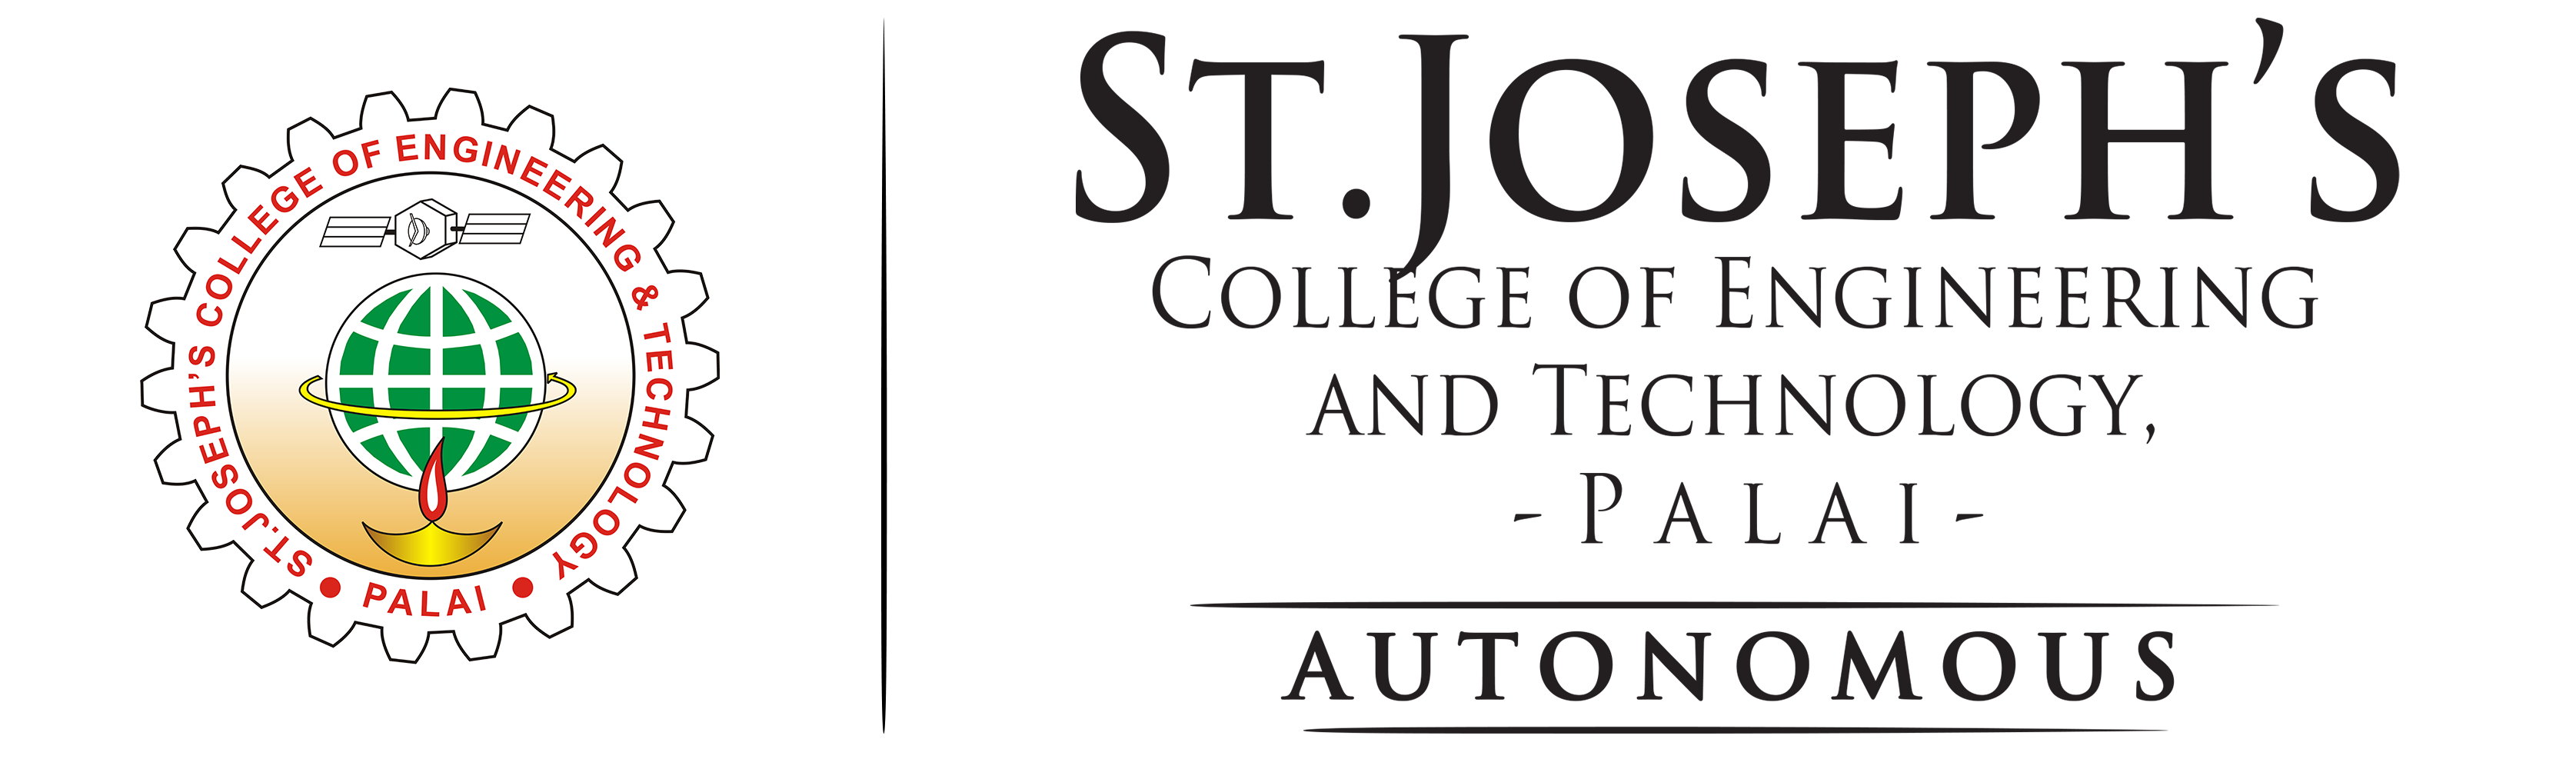 SJCET Palai Logo